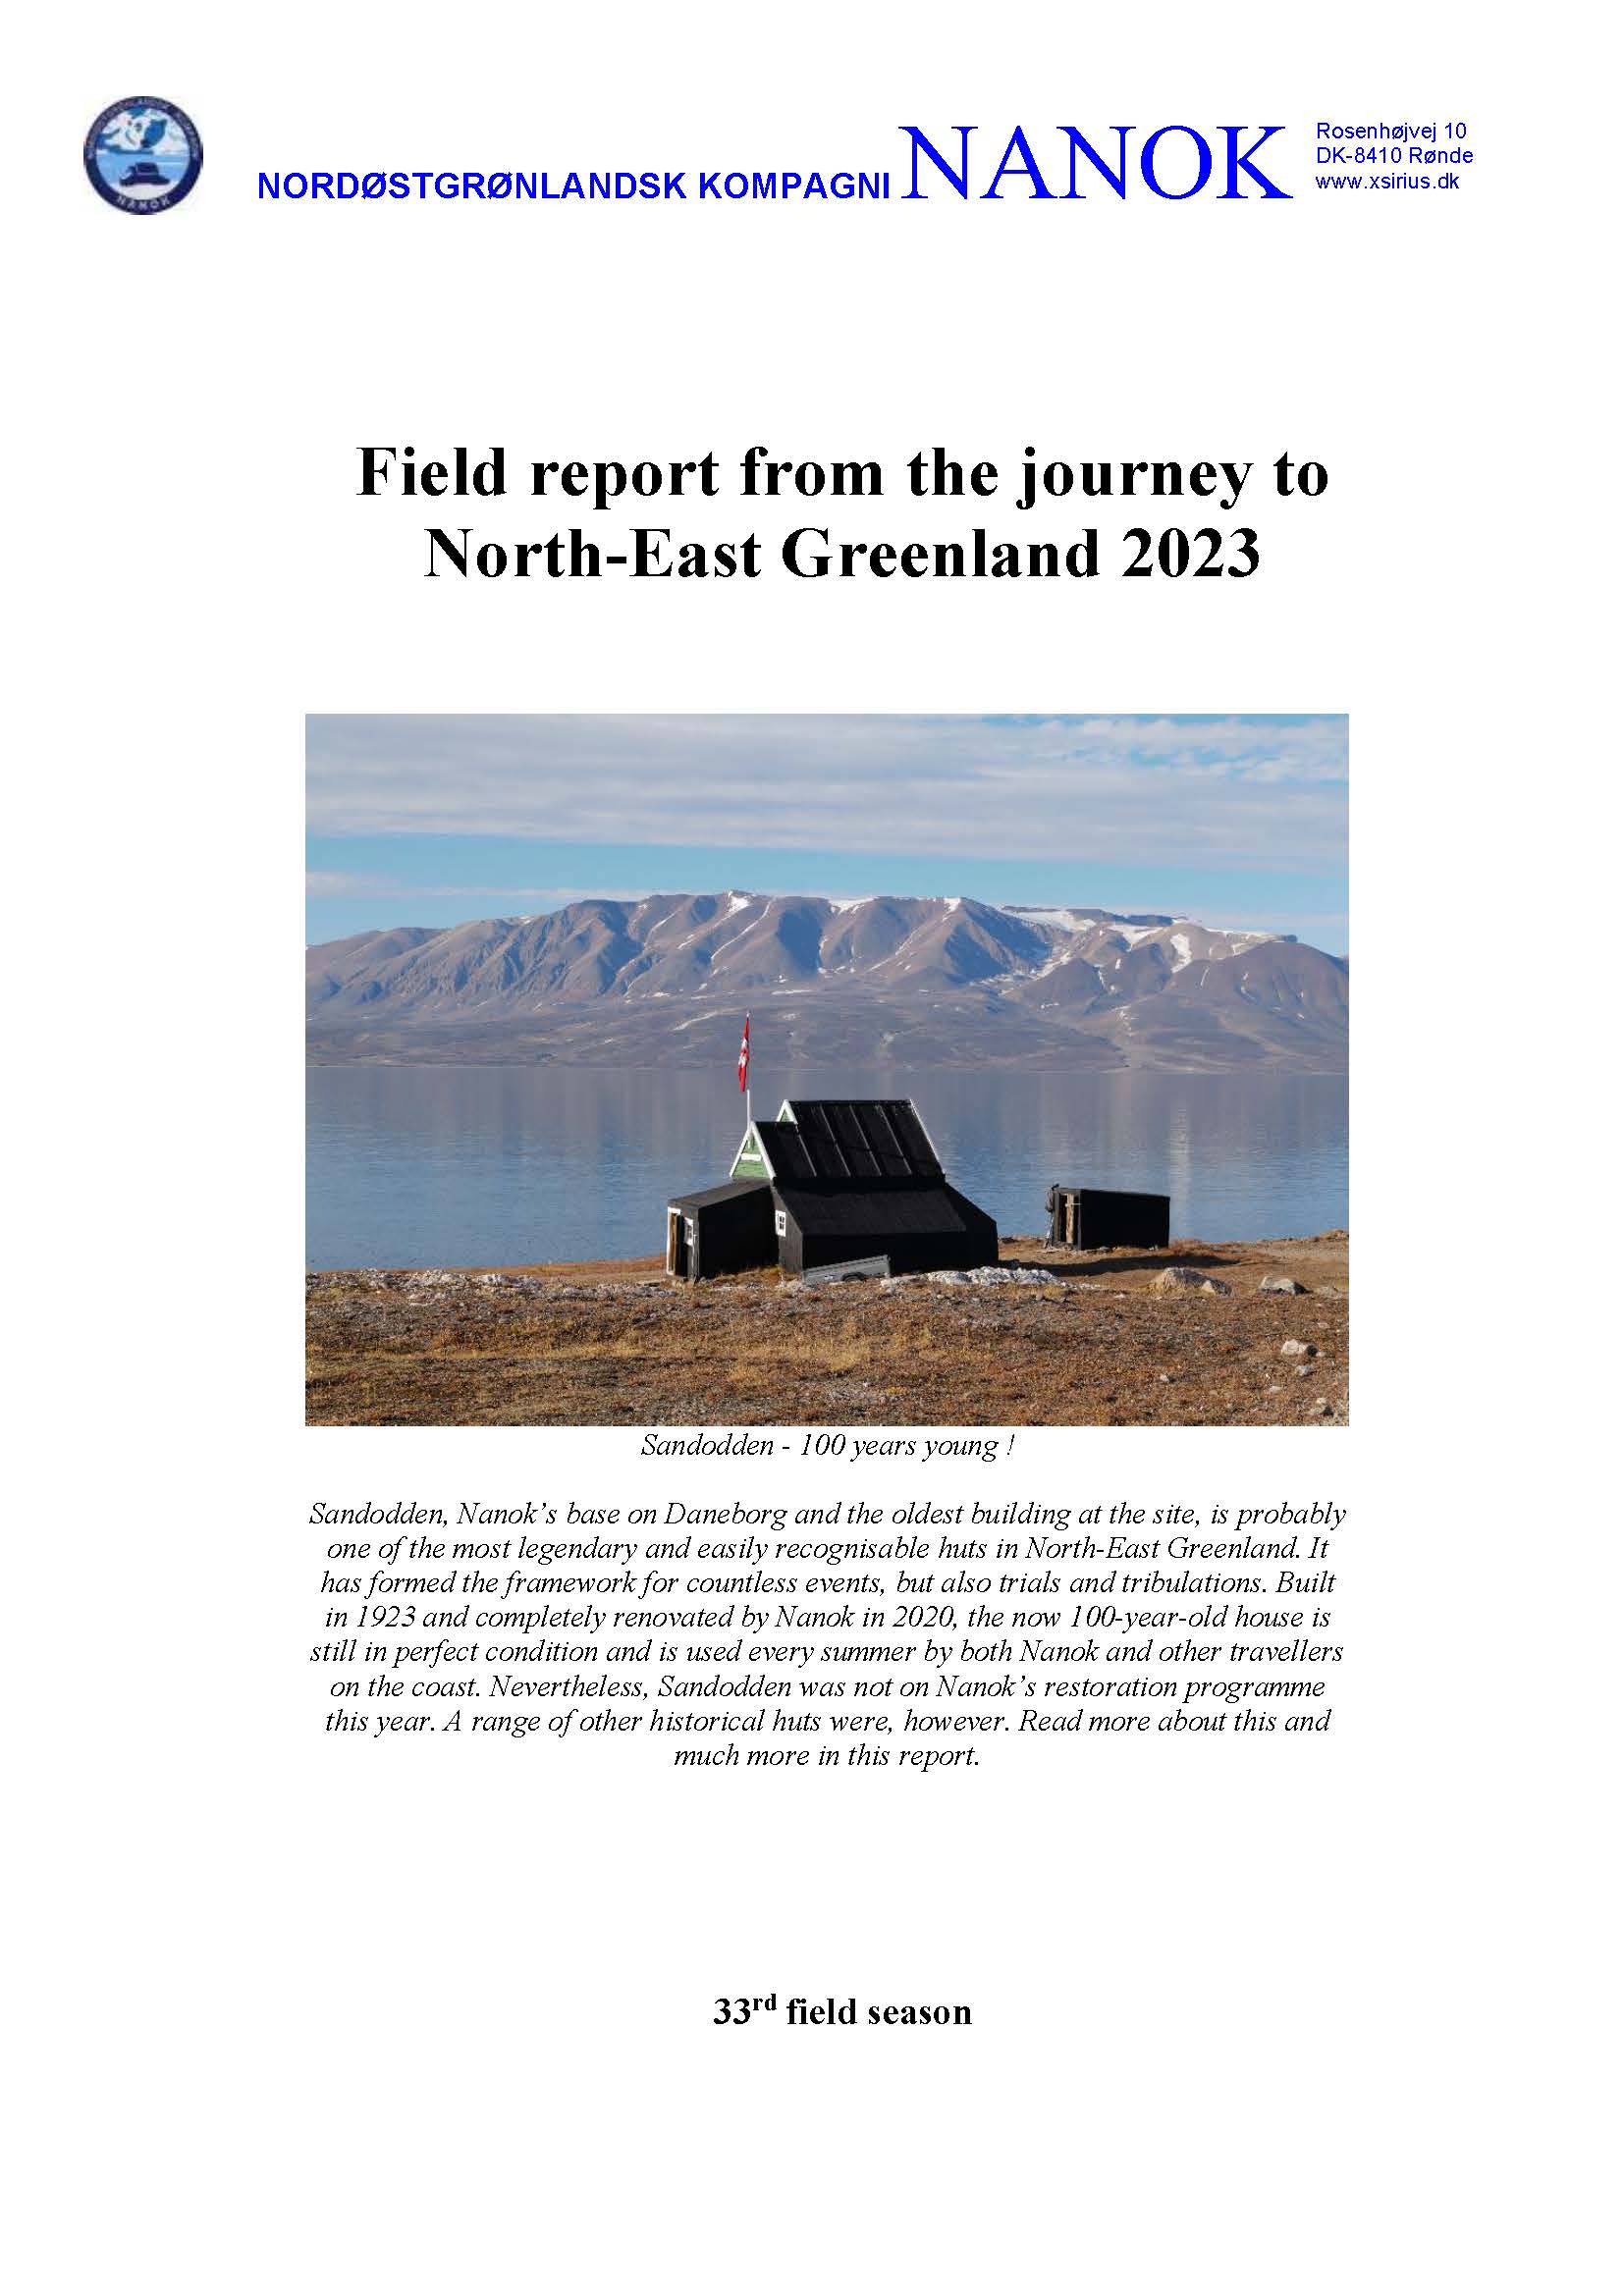 Field report 2023